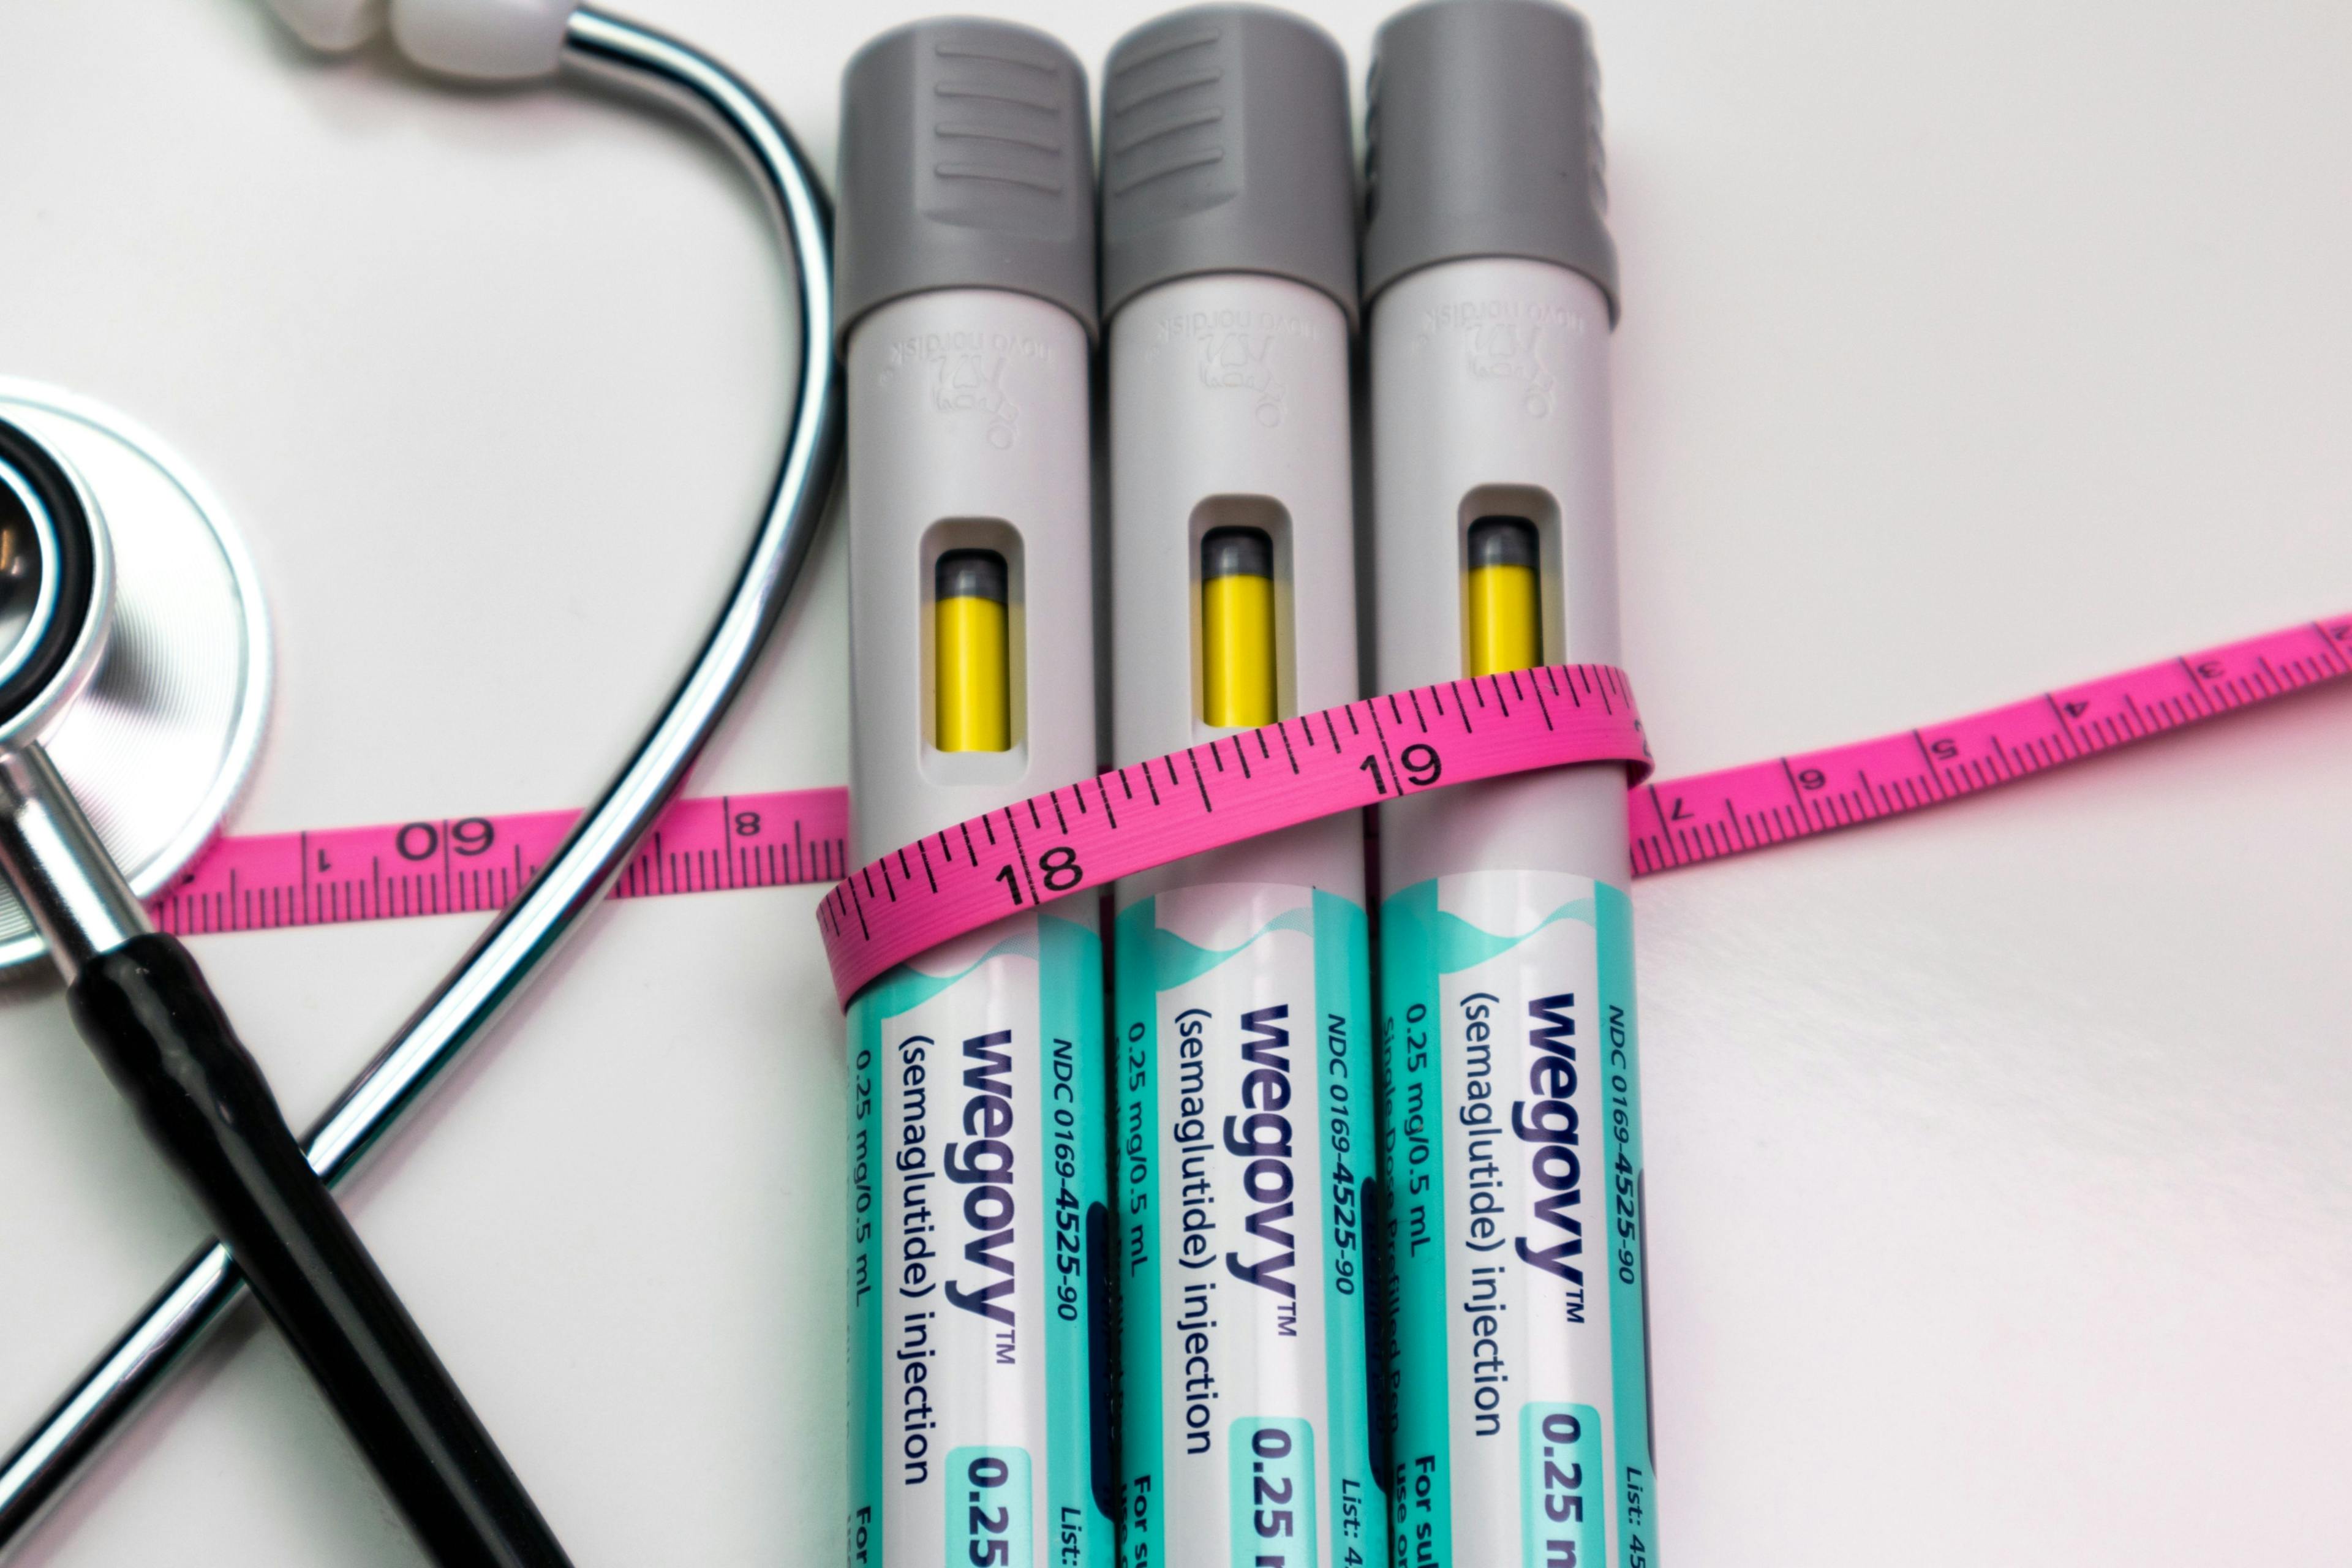 Wegovy pens with tape measure and stethoscope  | Image credit: © K KStock stock.adobe.com